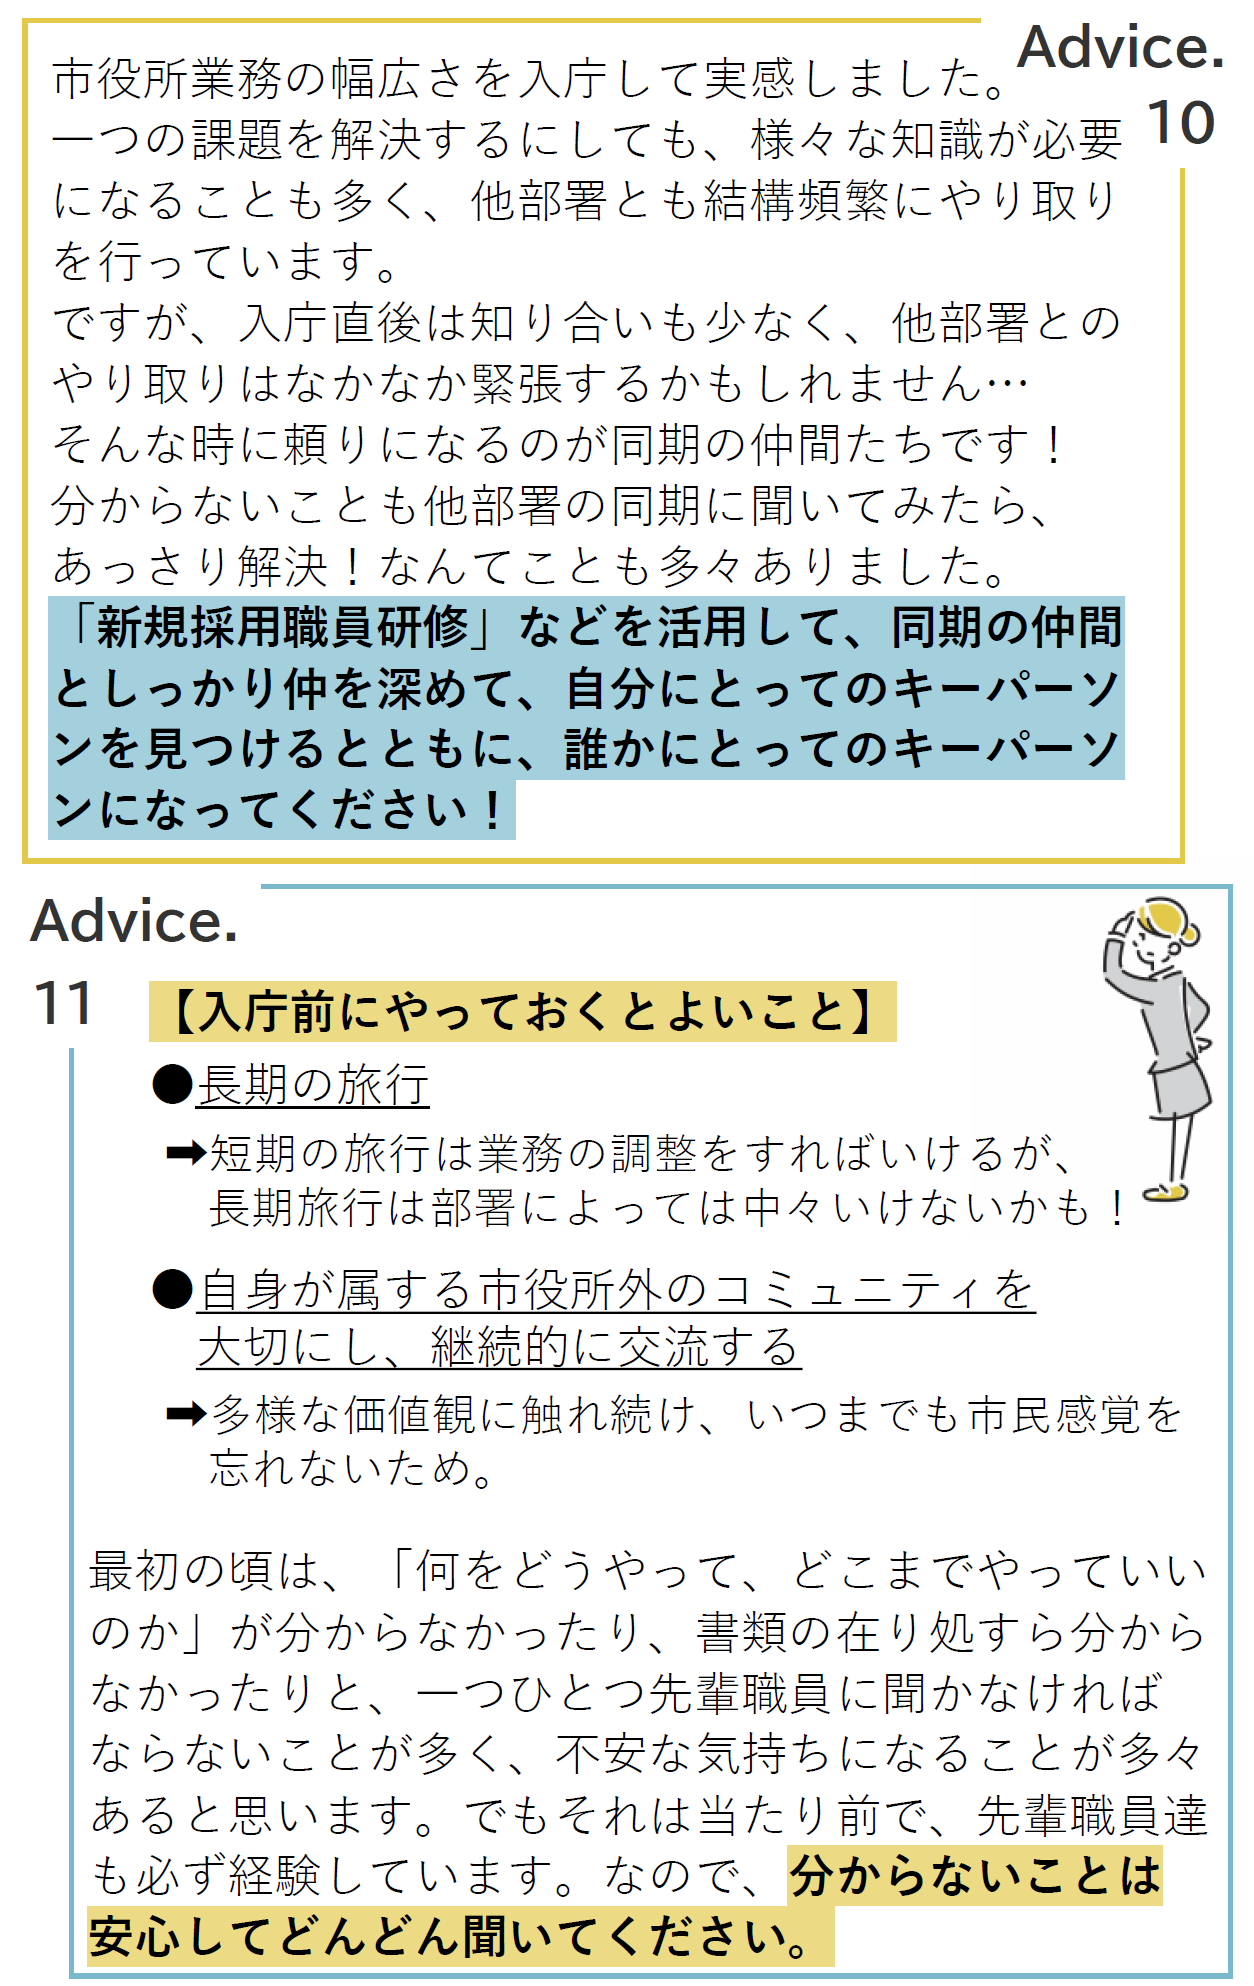 advice-05